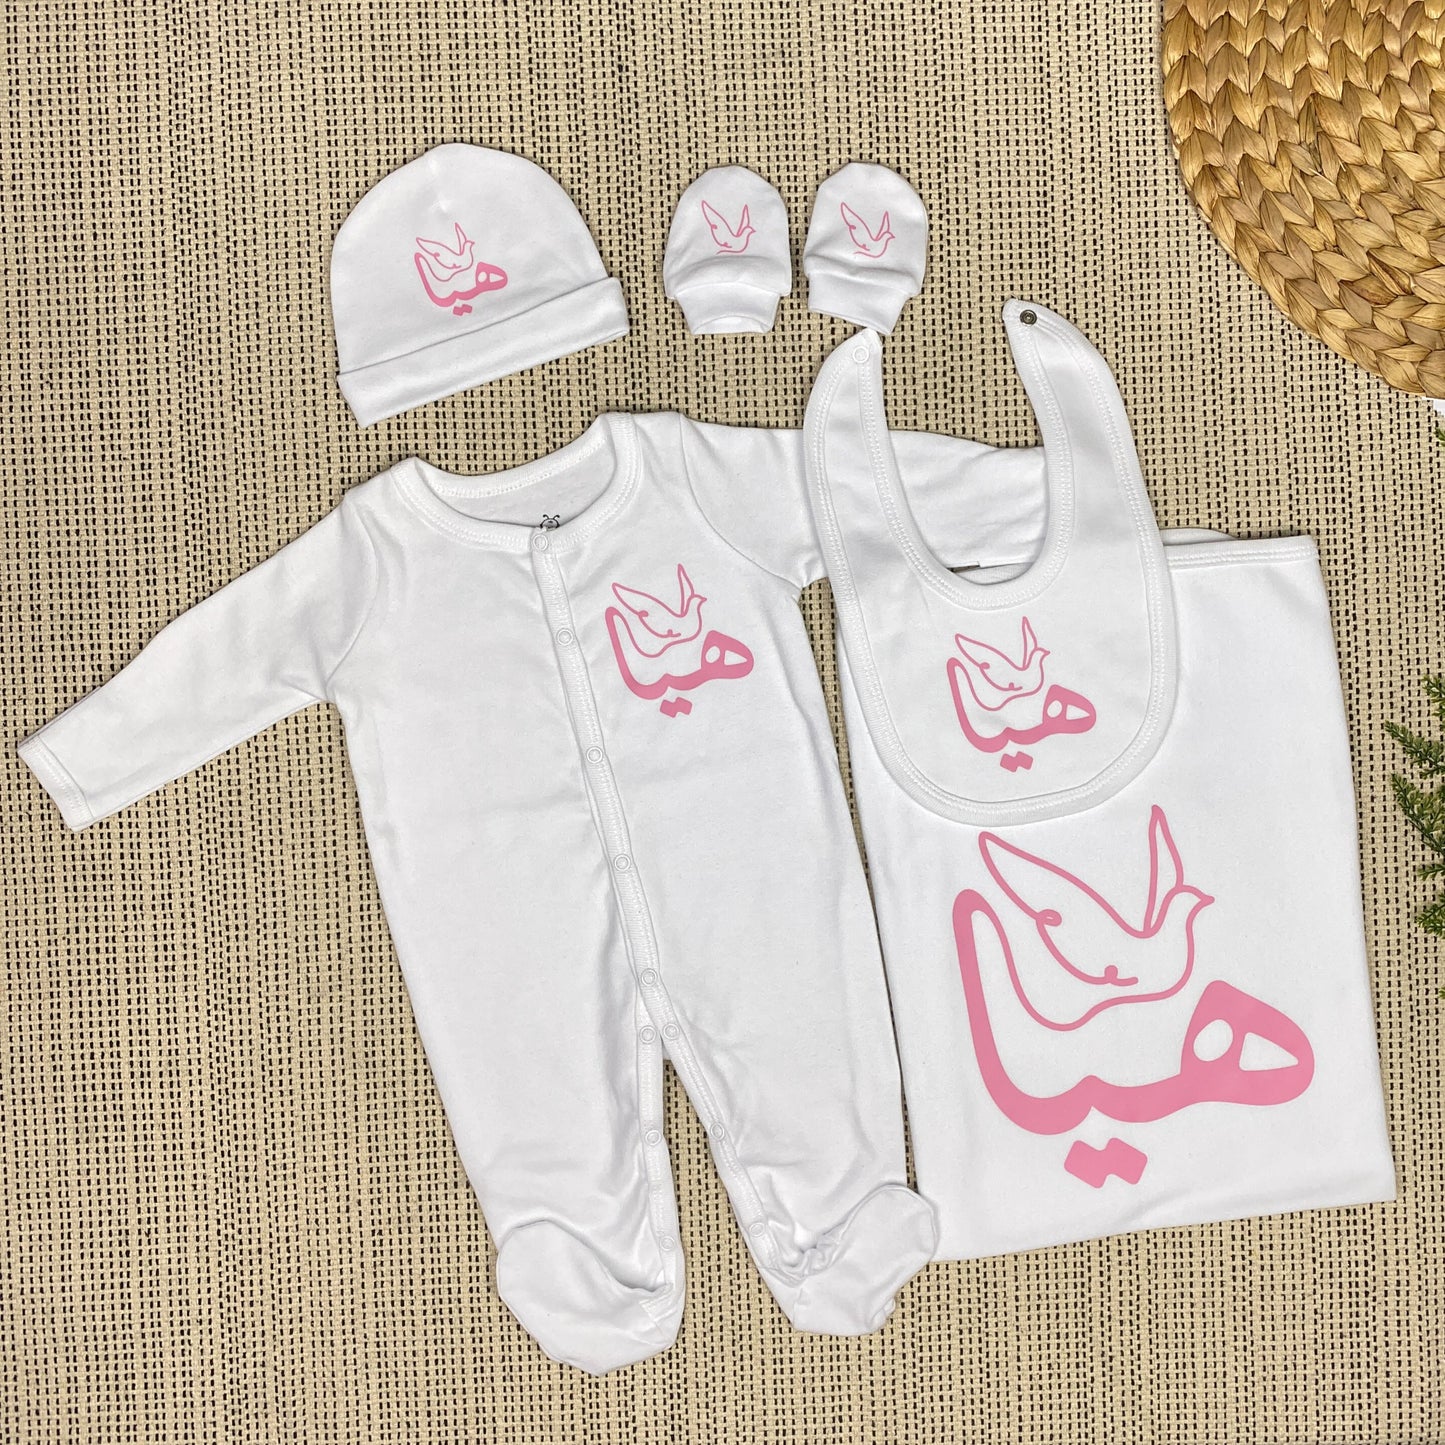 Personalized Baby Clothing Set (Blanket, Sleepsuit, Beanie, Bib, Mittens) - Dove